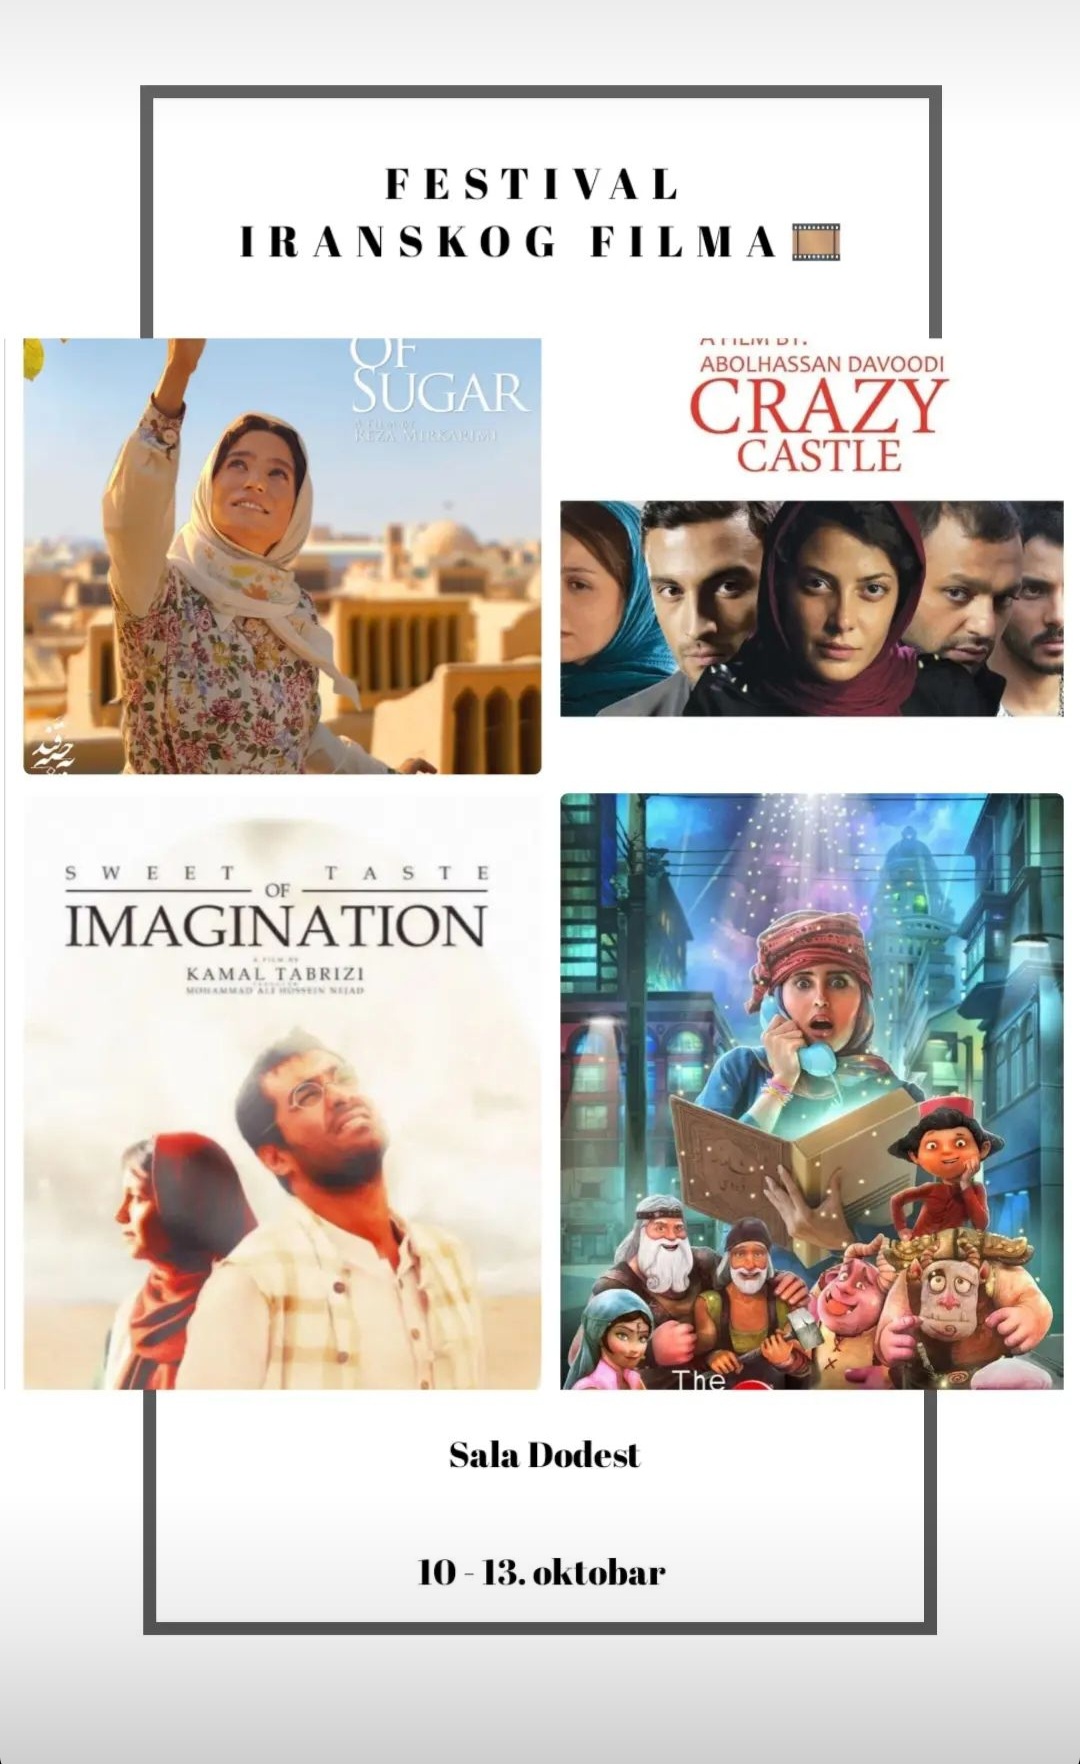 Festival iranskog filma, od 10. do 13. oktobra u sali DODEST